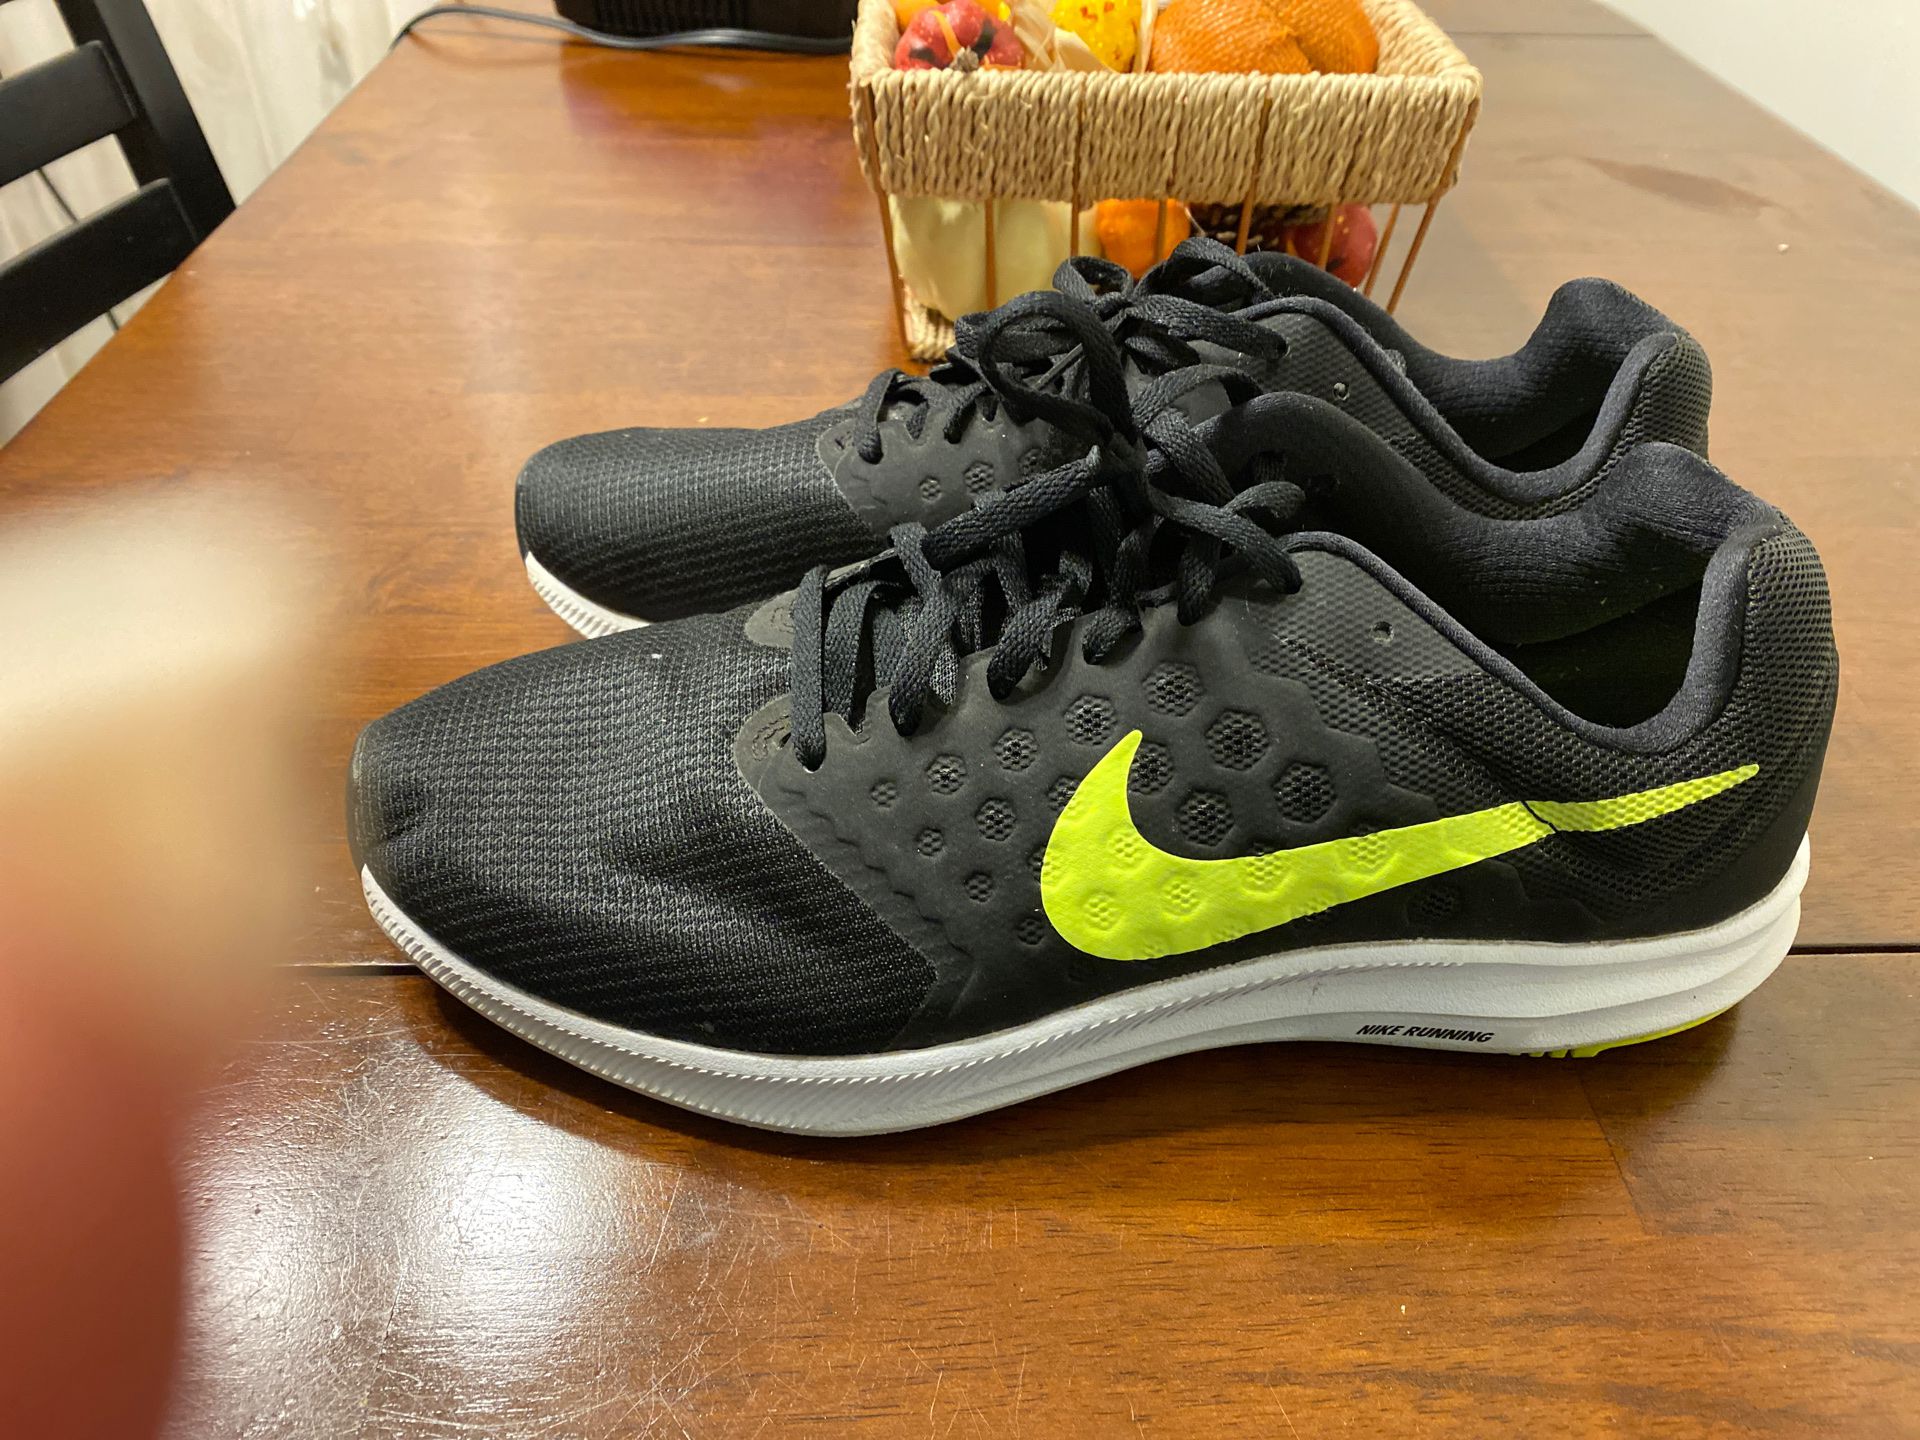 Men’s Nike downshifter 7 shoes size 9.5